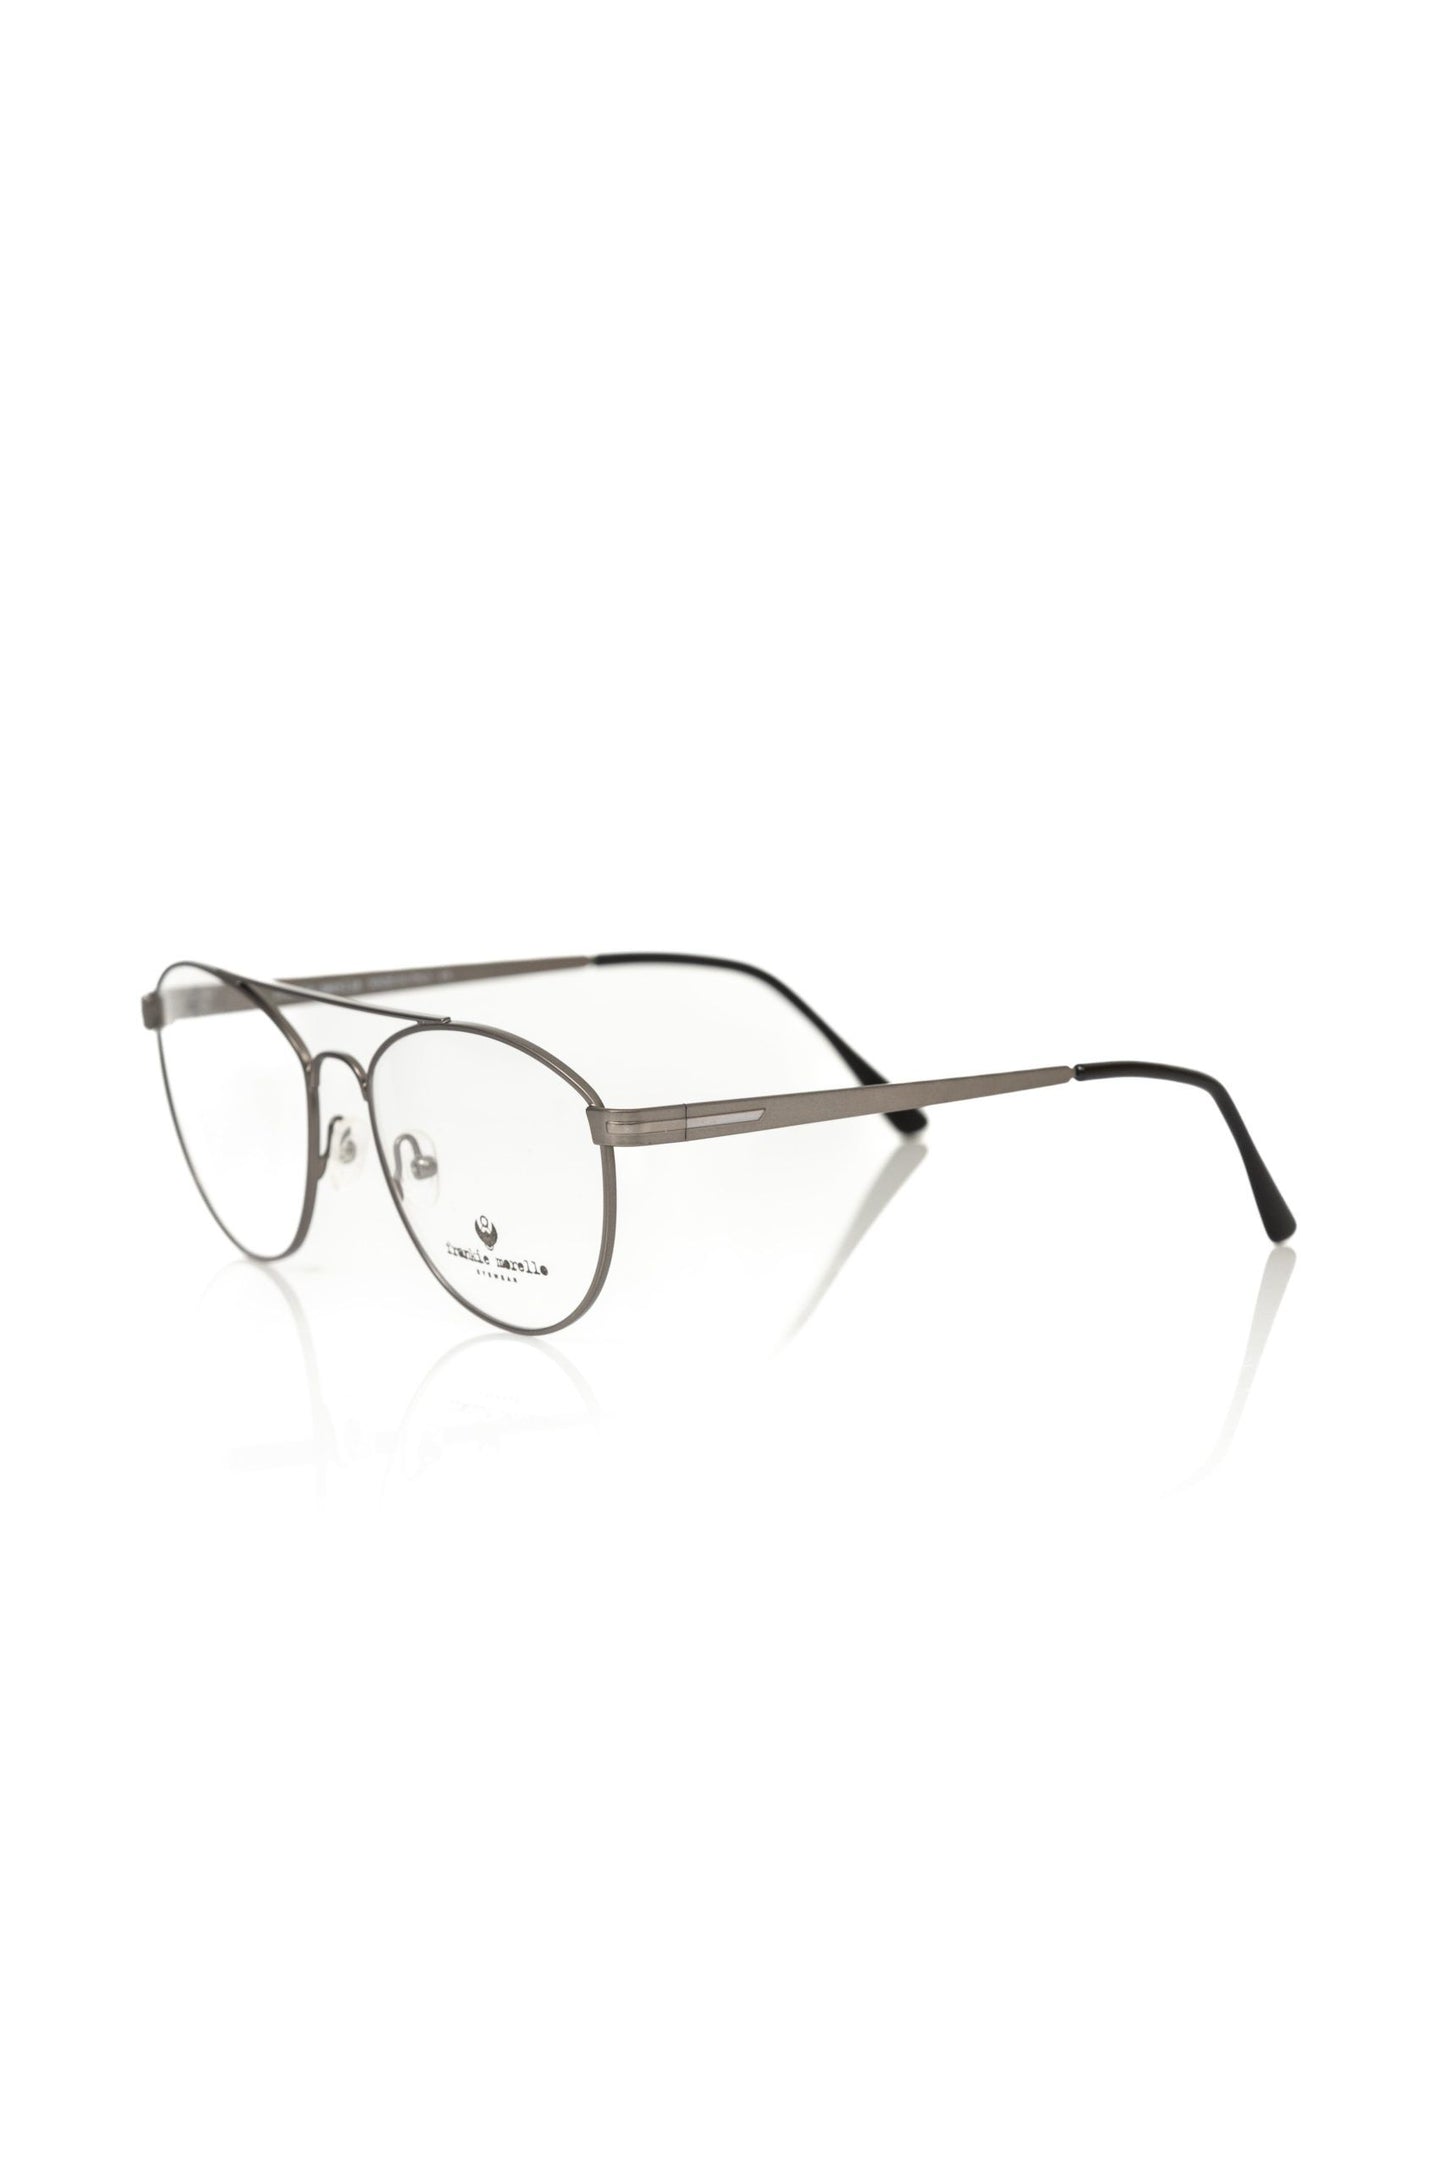 Frankie Morello Elegant Aviator Model Eyeglasses